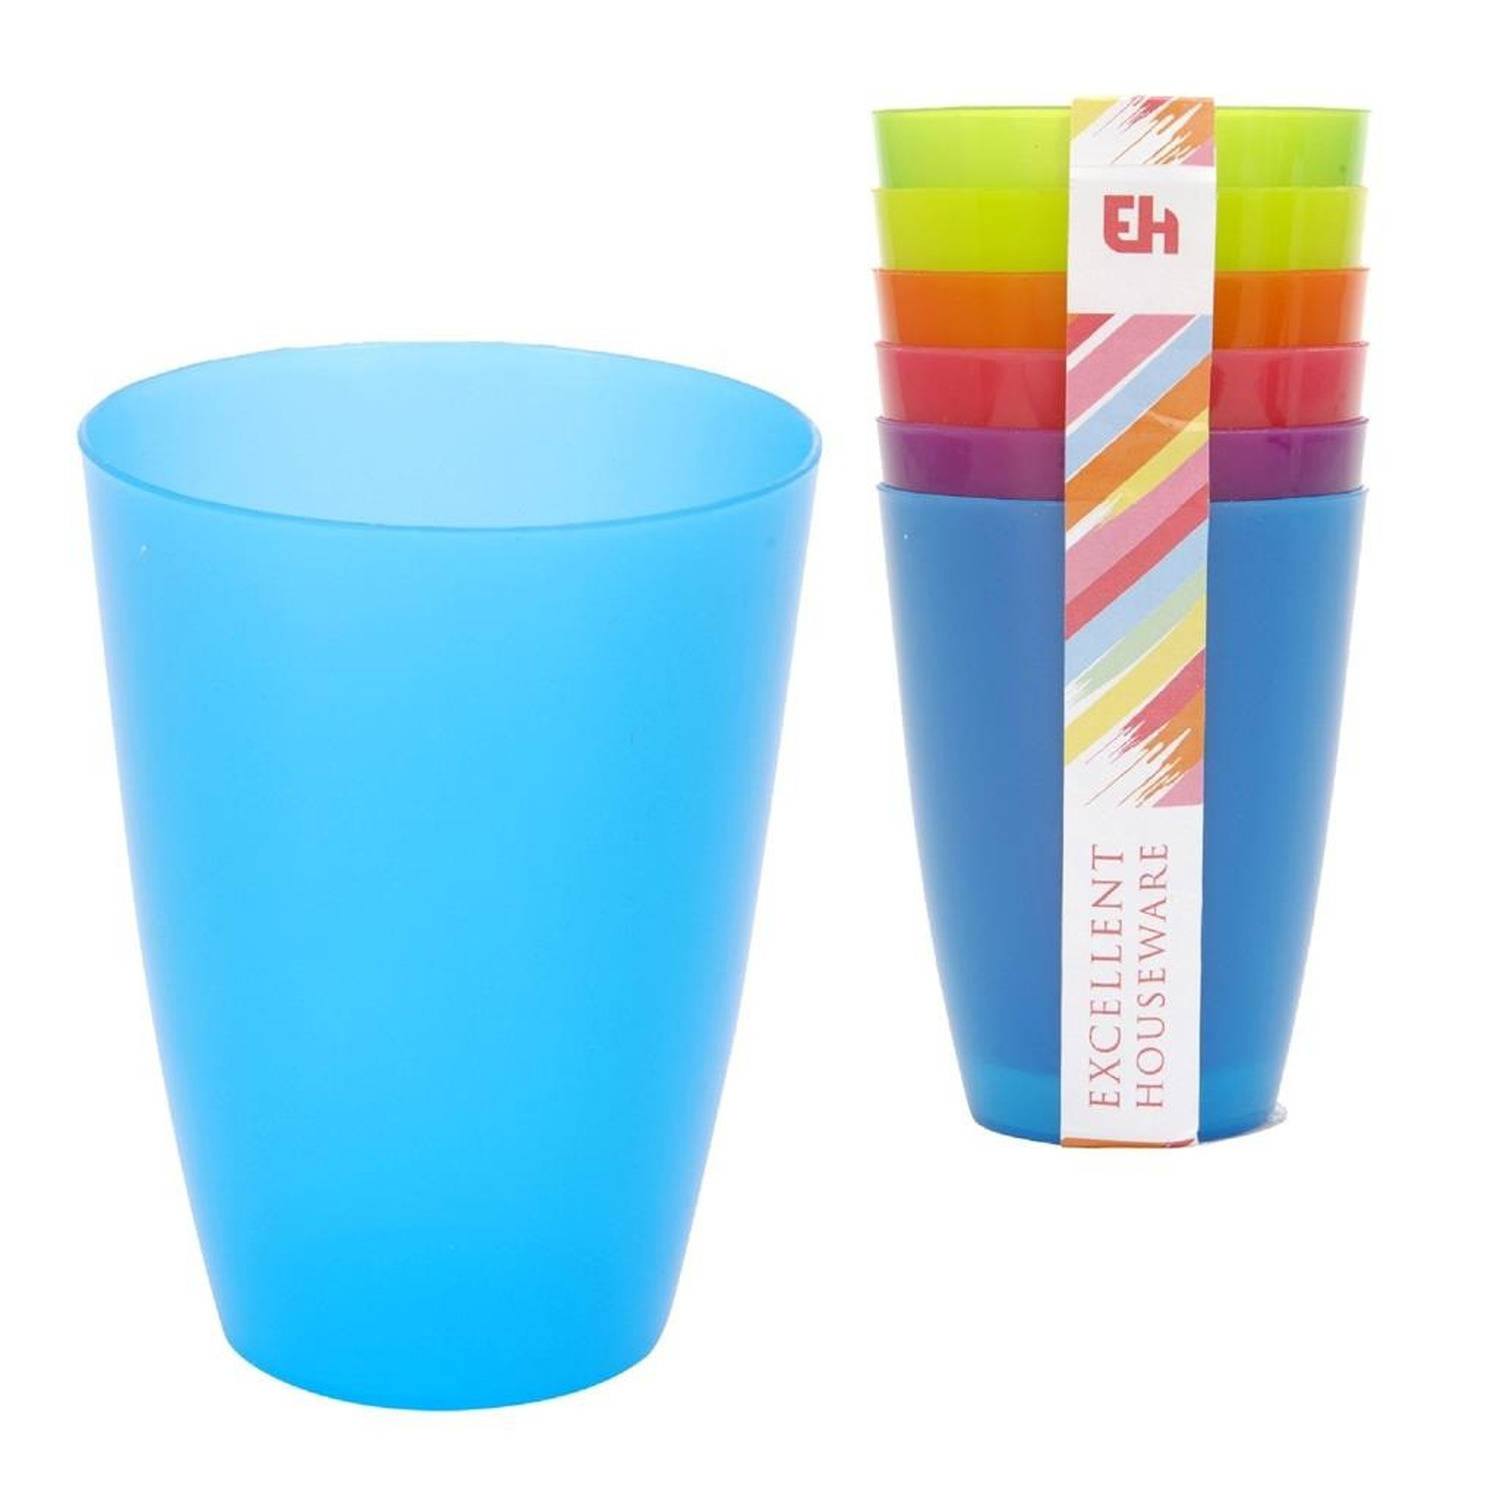 elektrode stok Toevallig 6x Gekleurde drinkbekers/mokken kunststof 10 cm voor kinderen - Drinkbekers  | Blokker